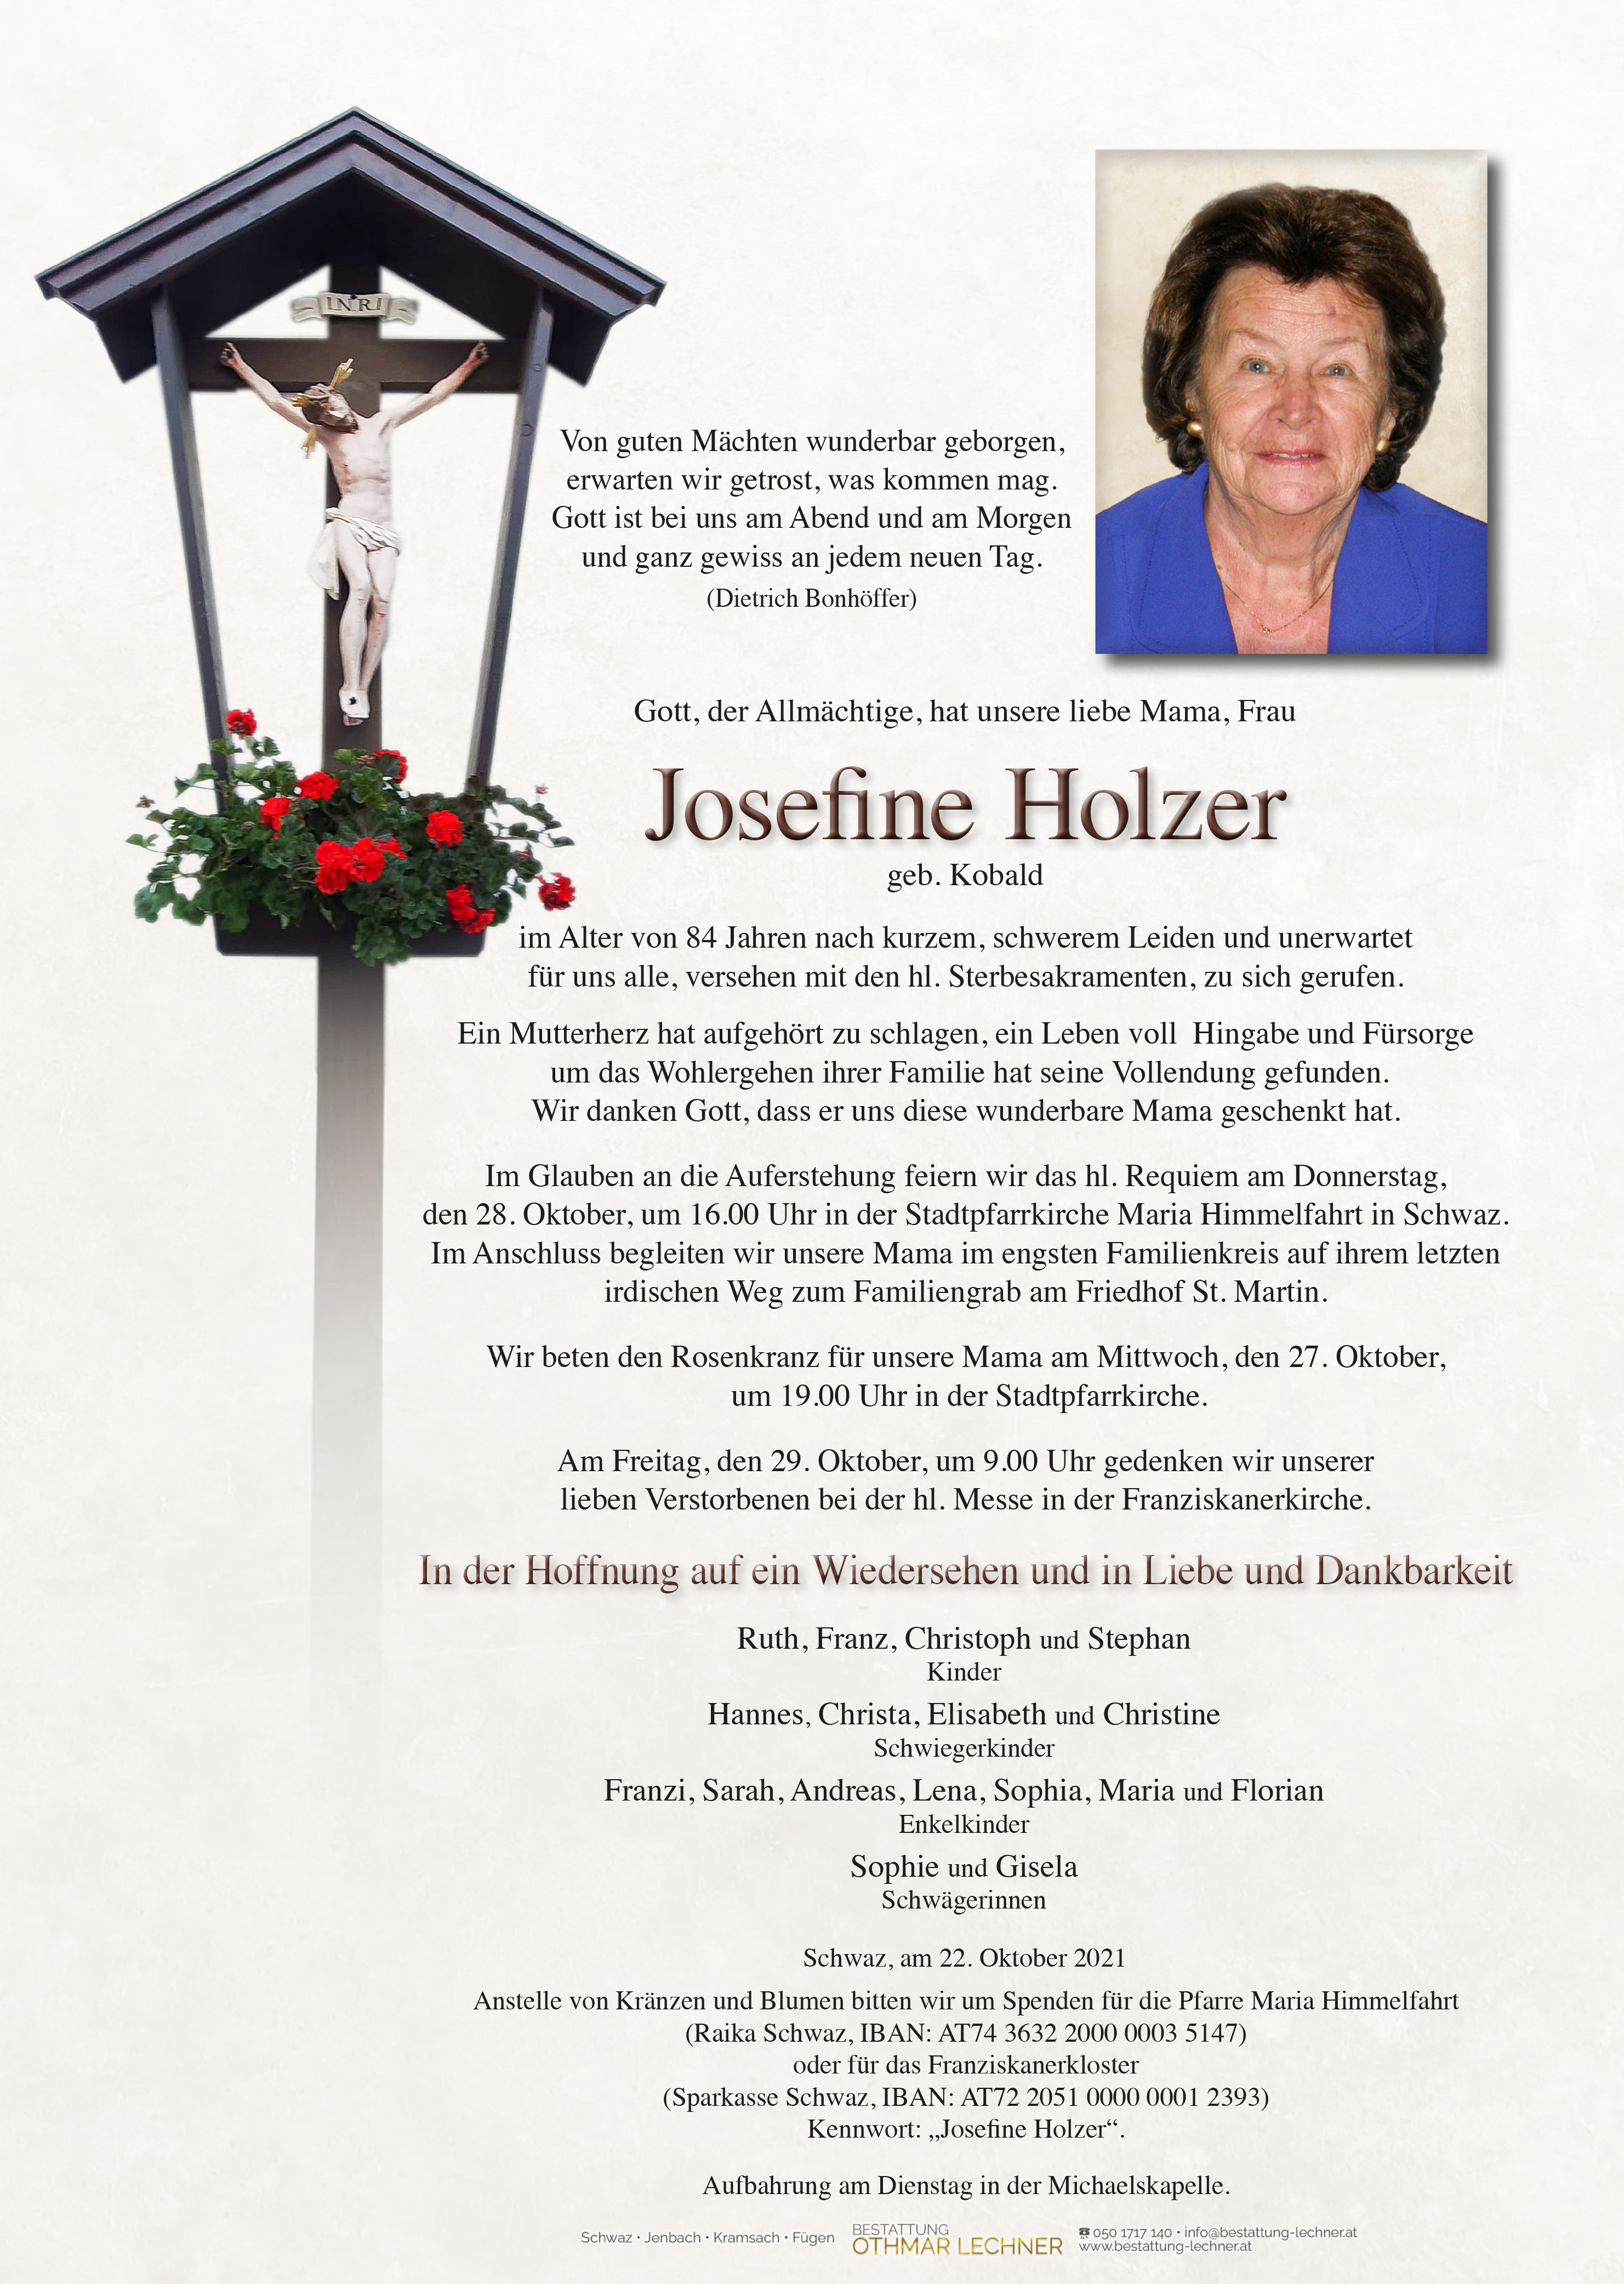 Josefine Holzer